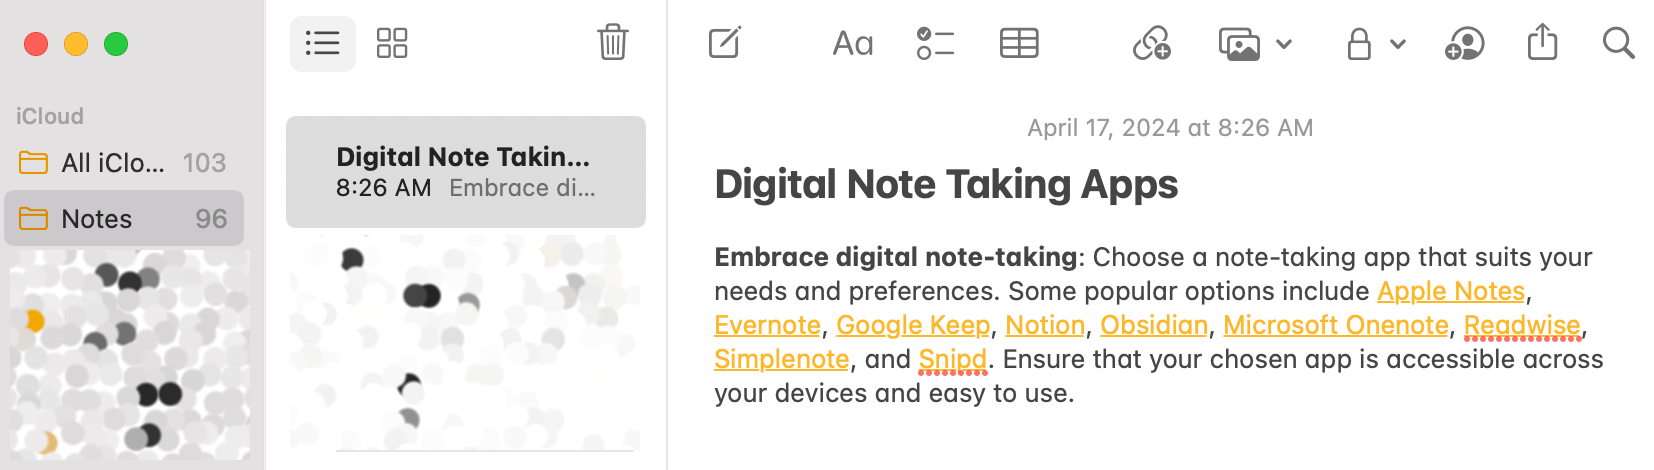 idea-management-framework-digital-note-taking-app-example